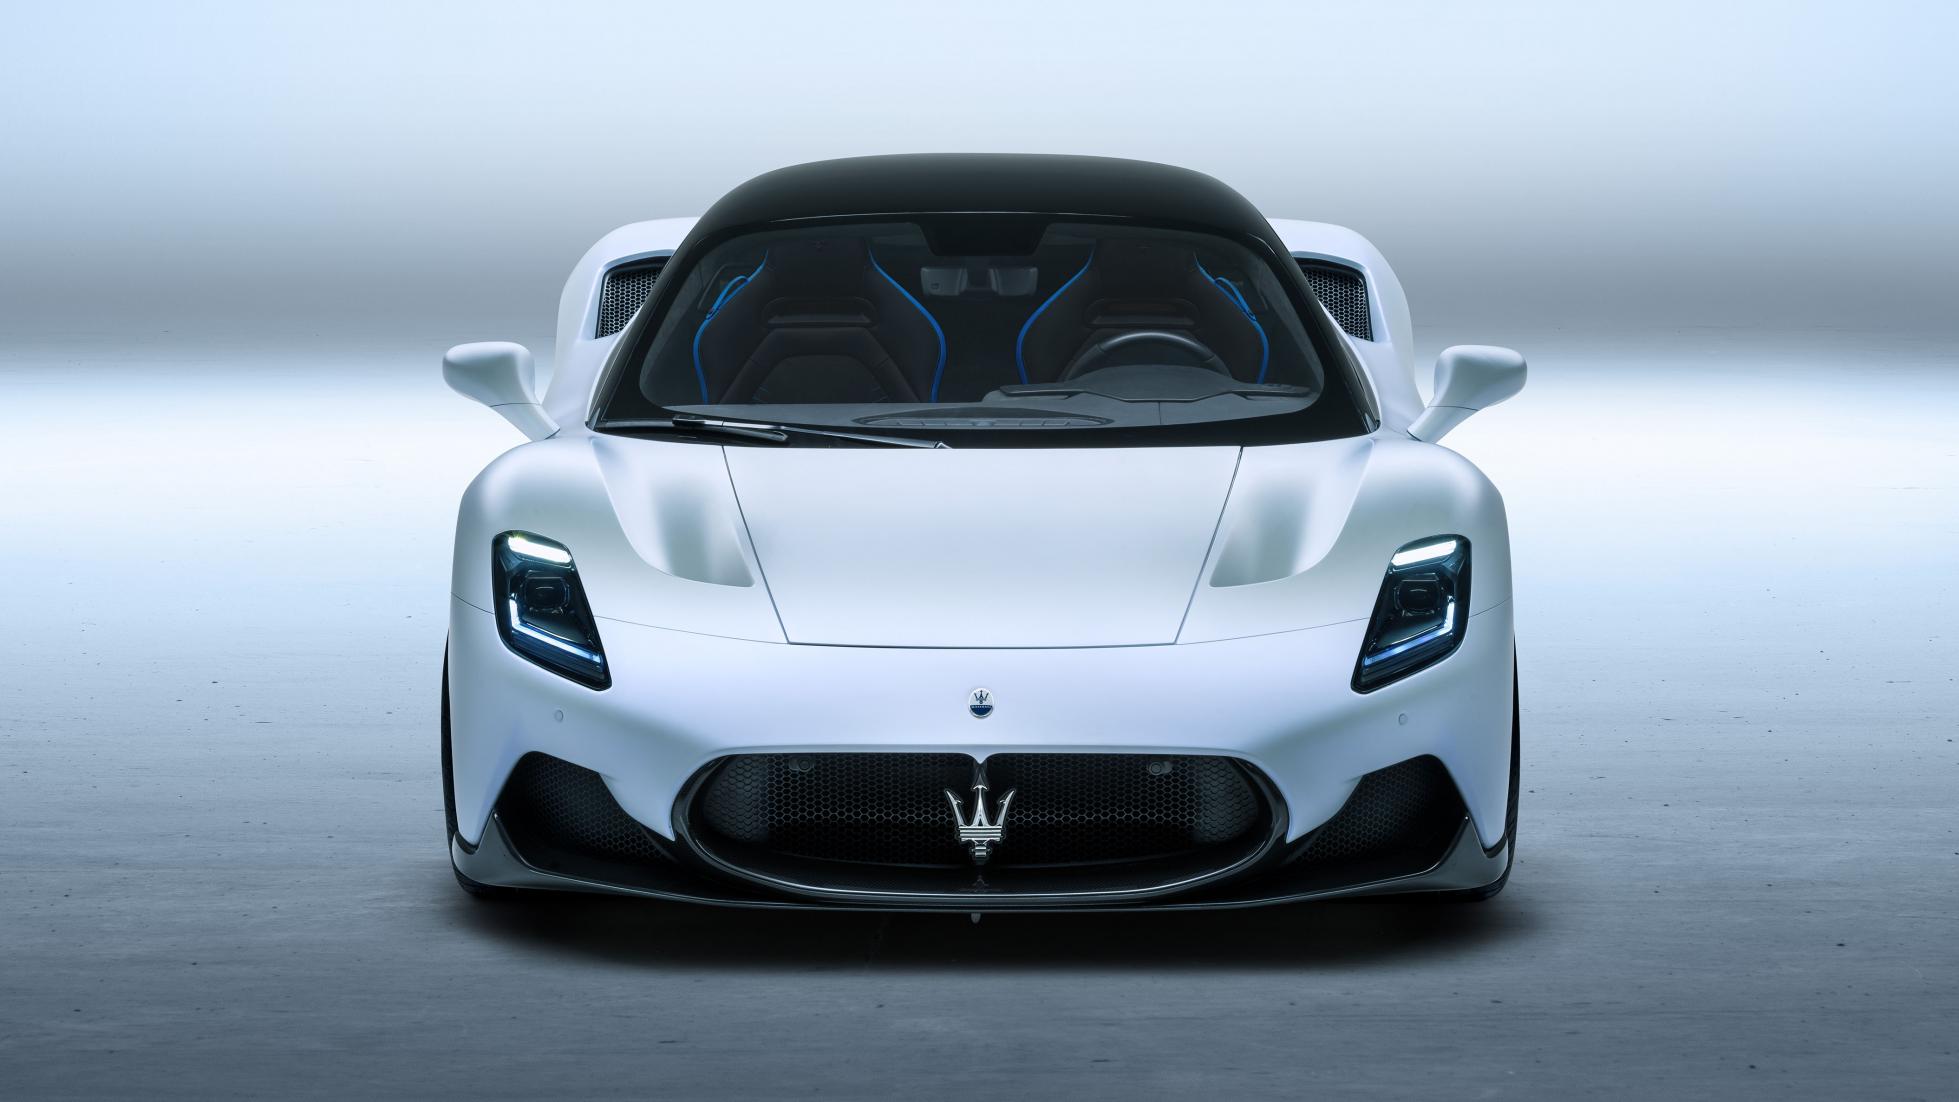 Maserati's electric MC20 will be a tri-motor, 700bhp+ supercar